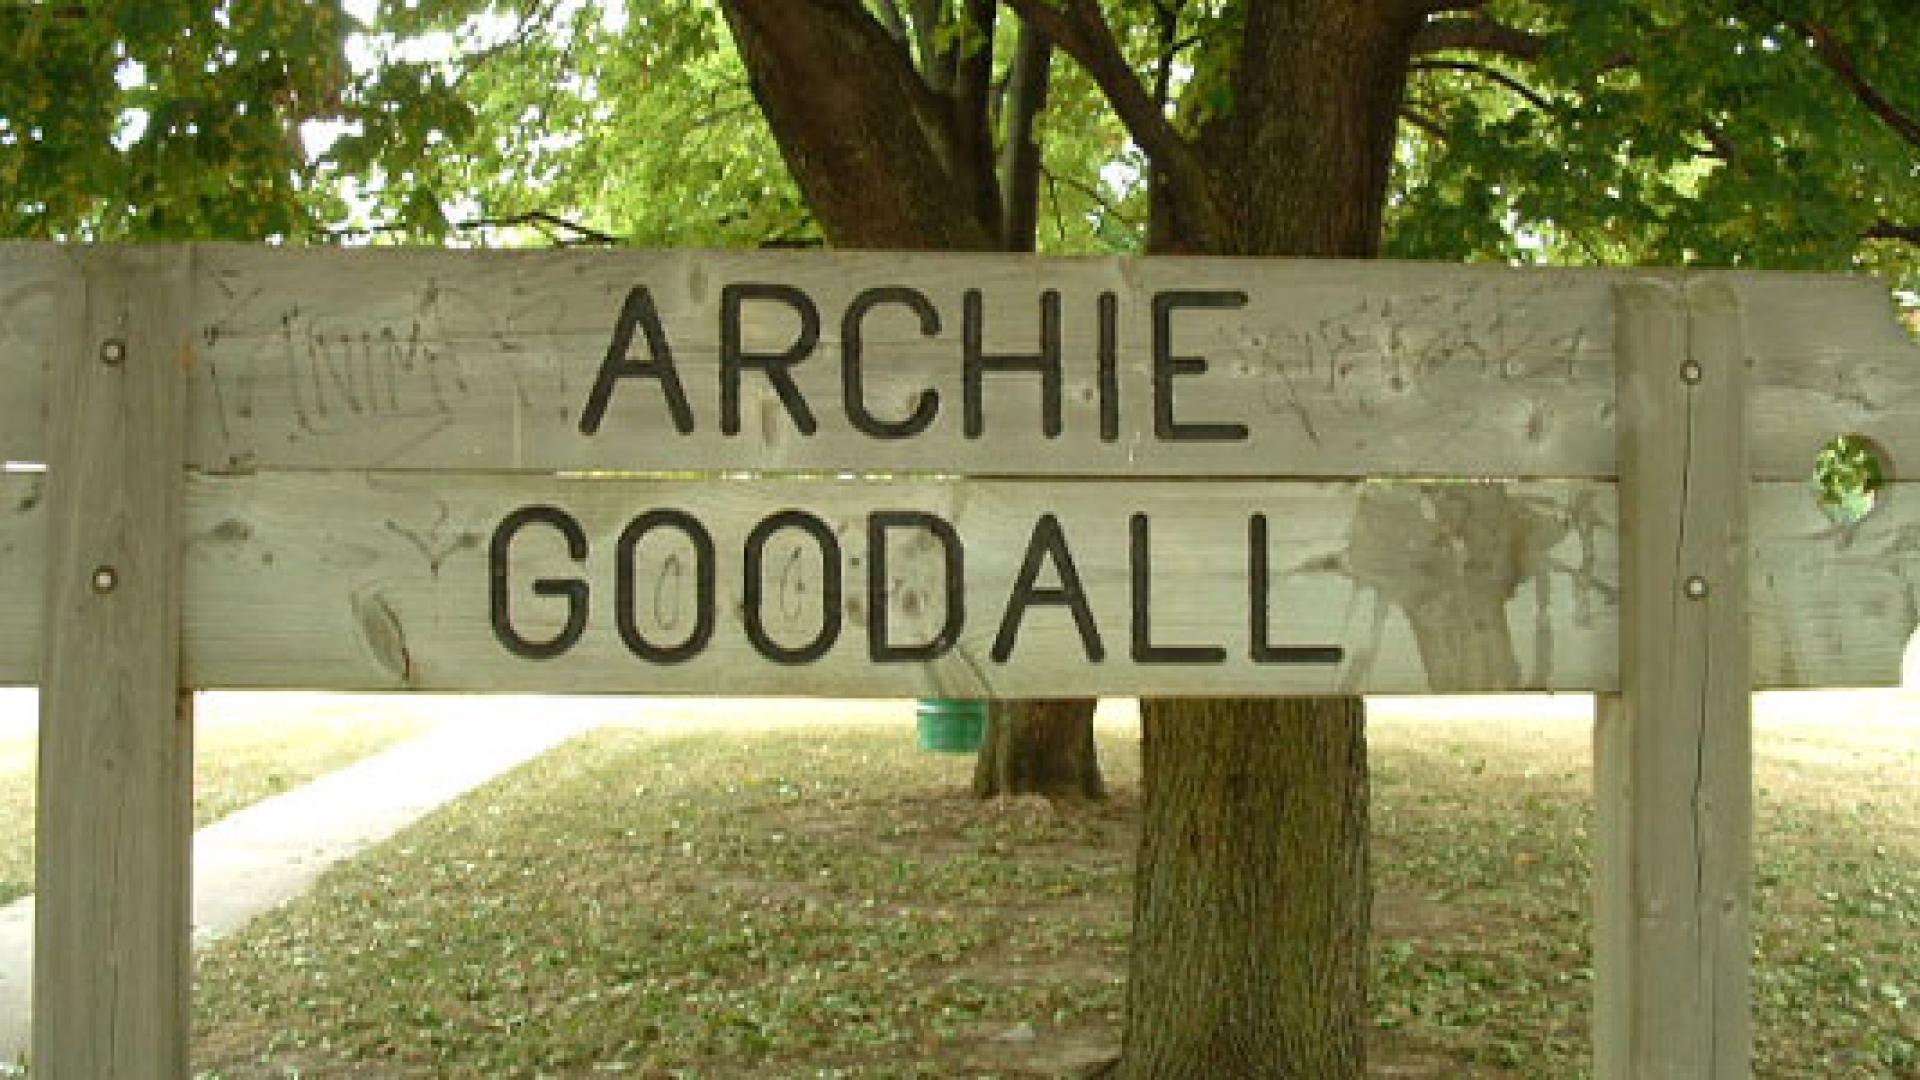 Archie Goodall Park sign